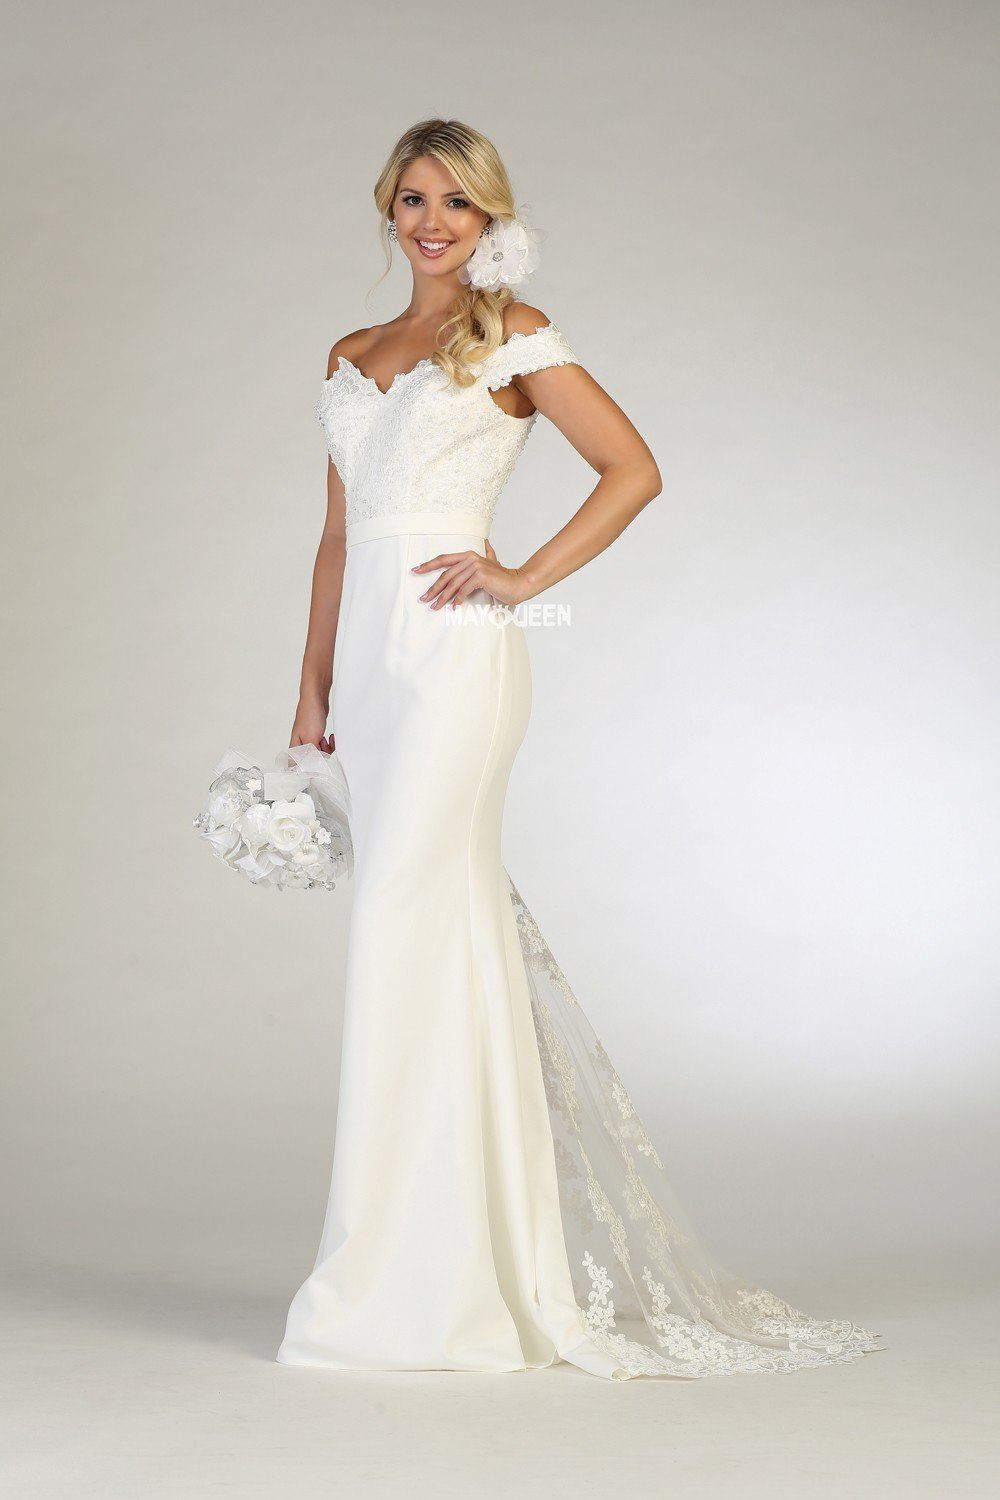 Vows Wedding Dress Store
 Vow renewal dress Rq7659 – Simply Fab Dress